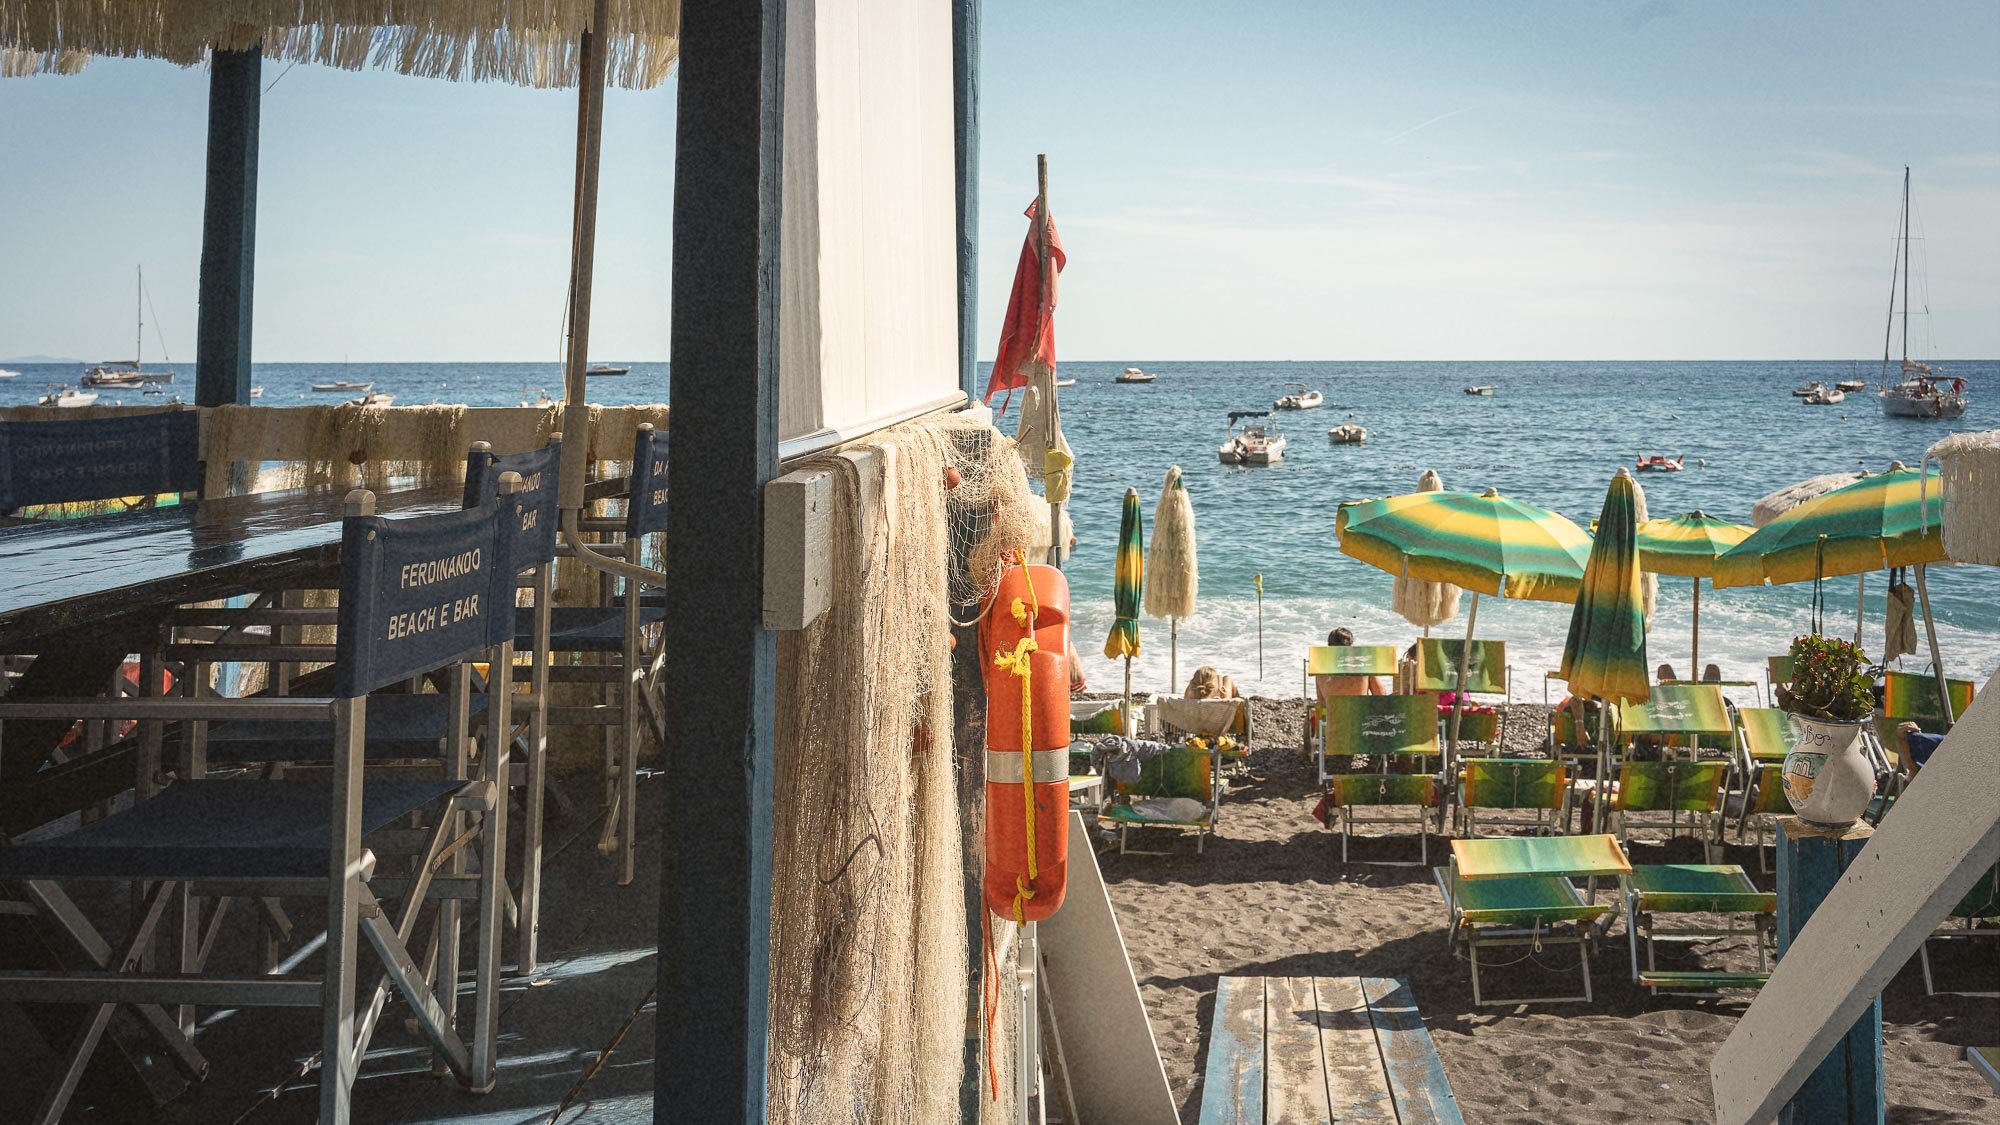 ckanani-beaches-in-positano-beach-clubs-10.jpg